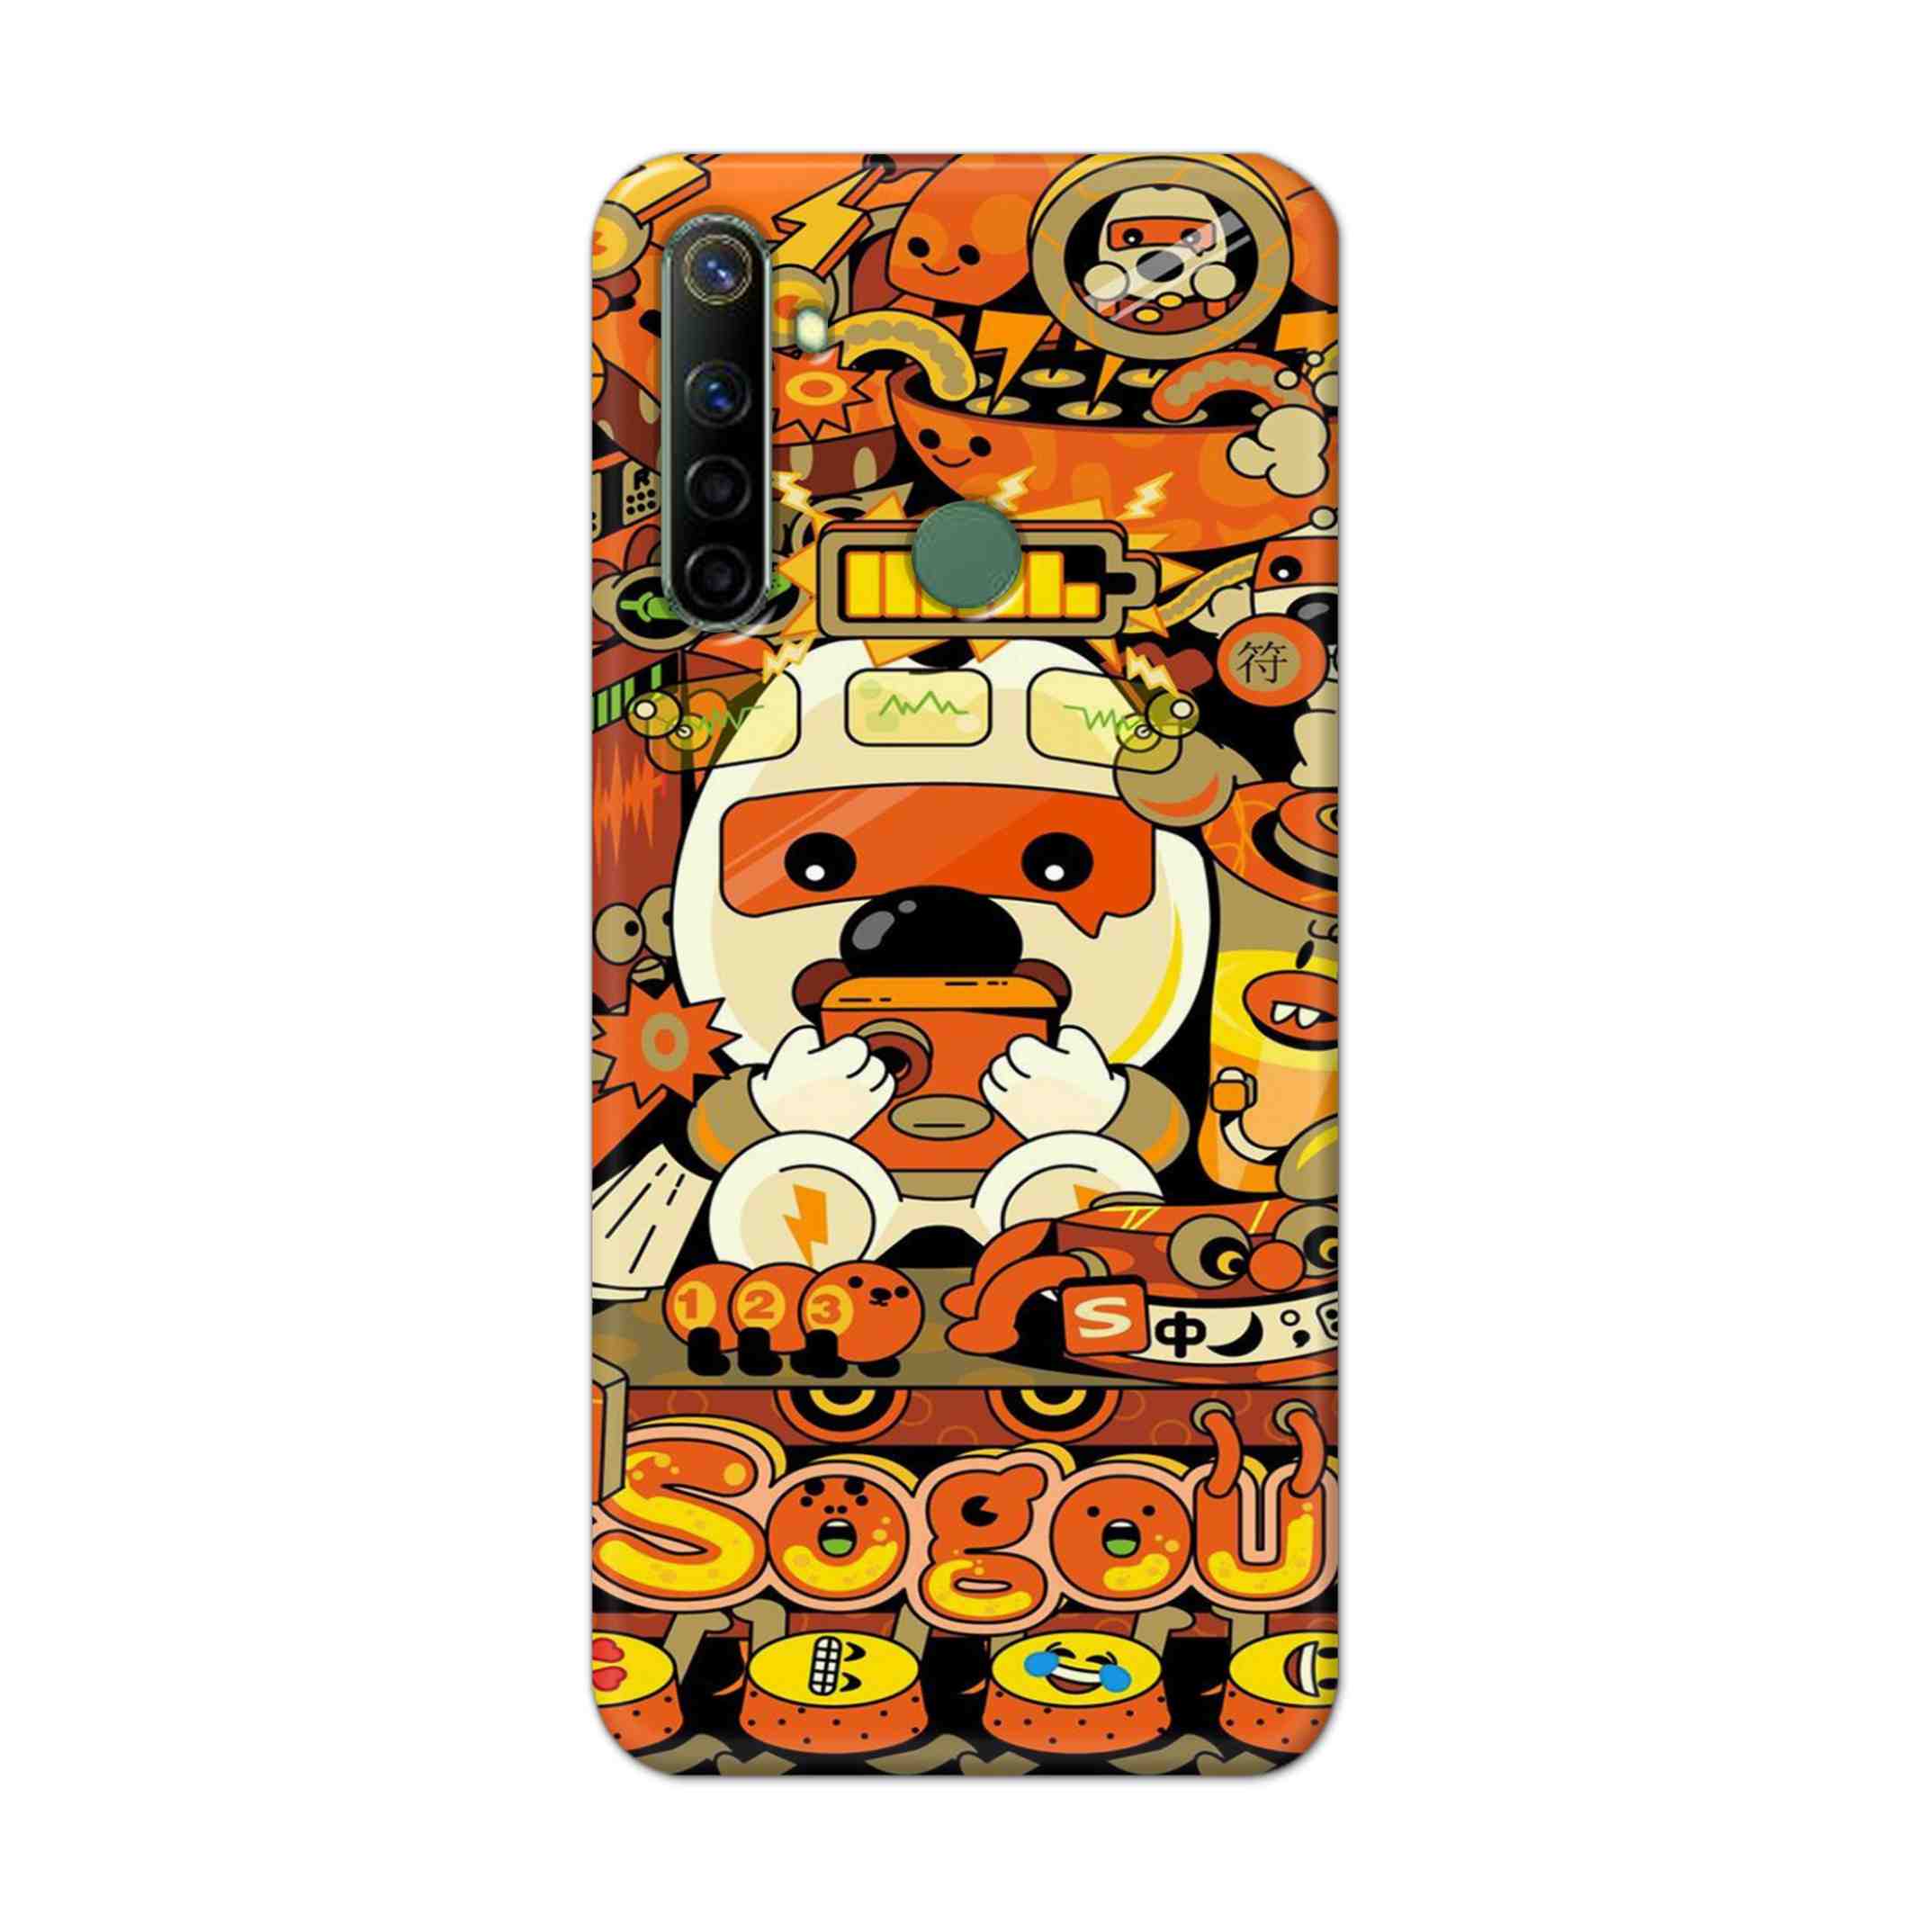 Buy Sogou Hard Back Mobile Phone Case Cover For Realme Narzo 10a Online